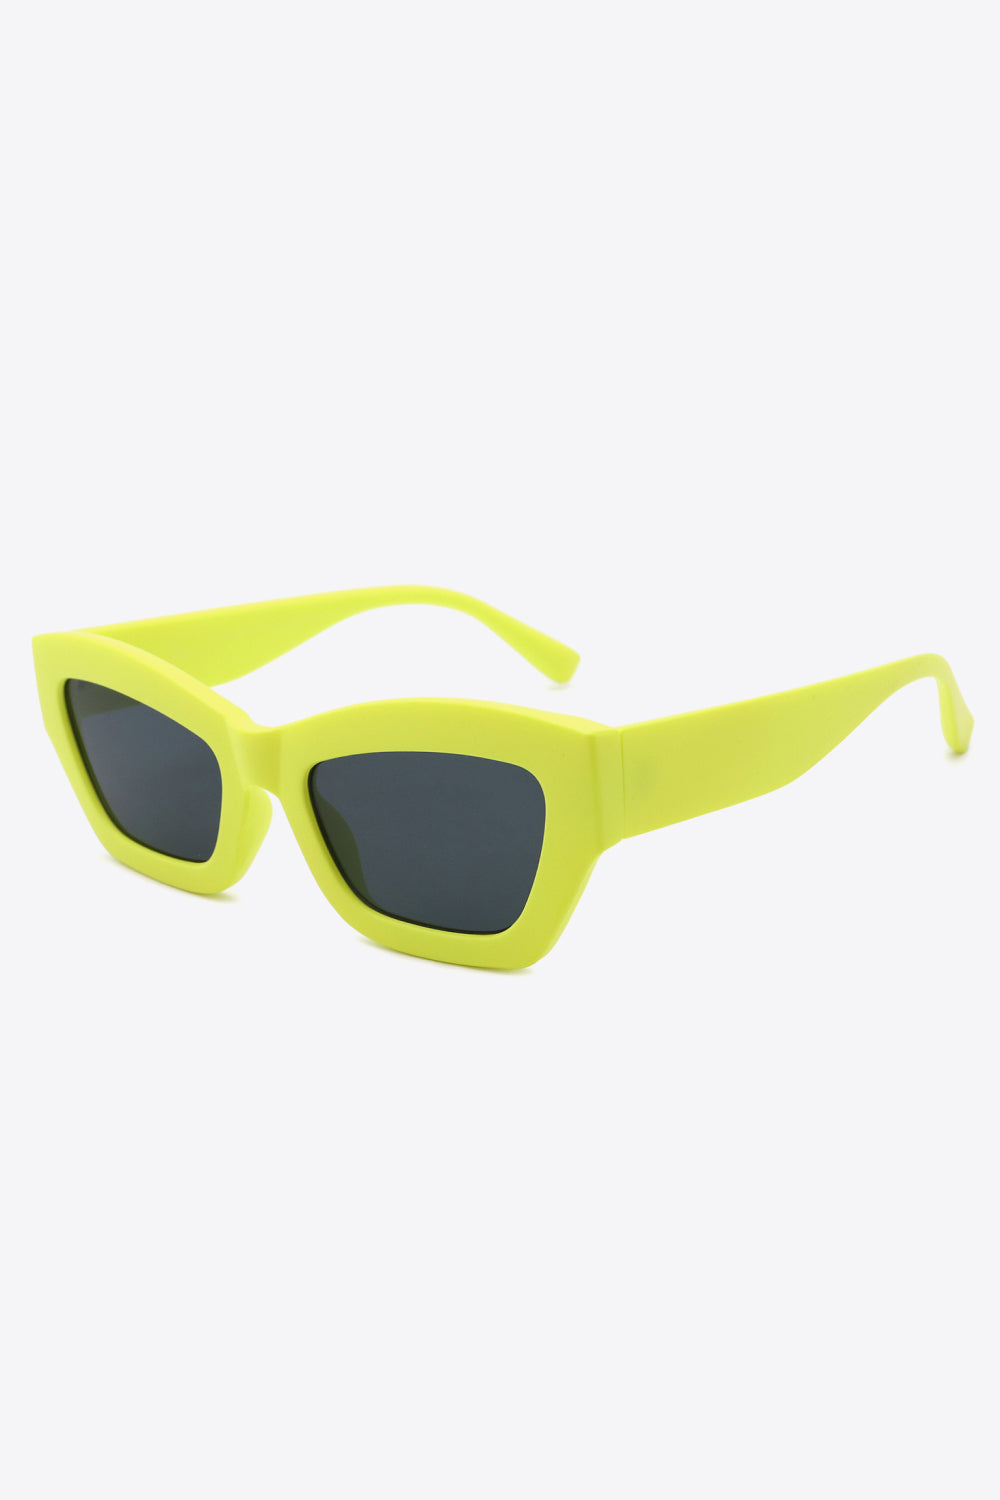 Classic UV400 Polycarbonate Frame Sunglasses - BEAUTY COSMOTICS SHOP